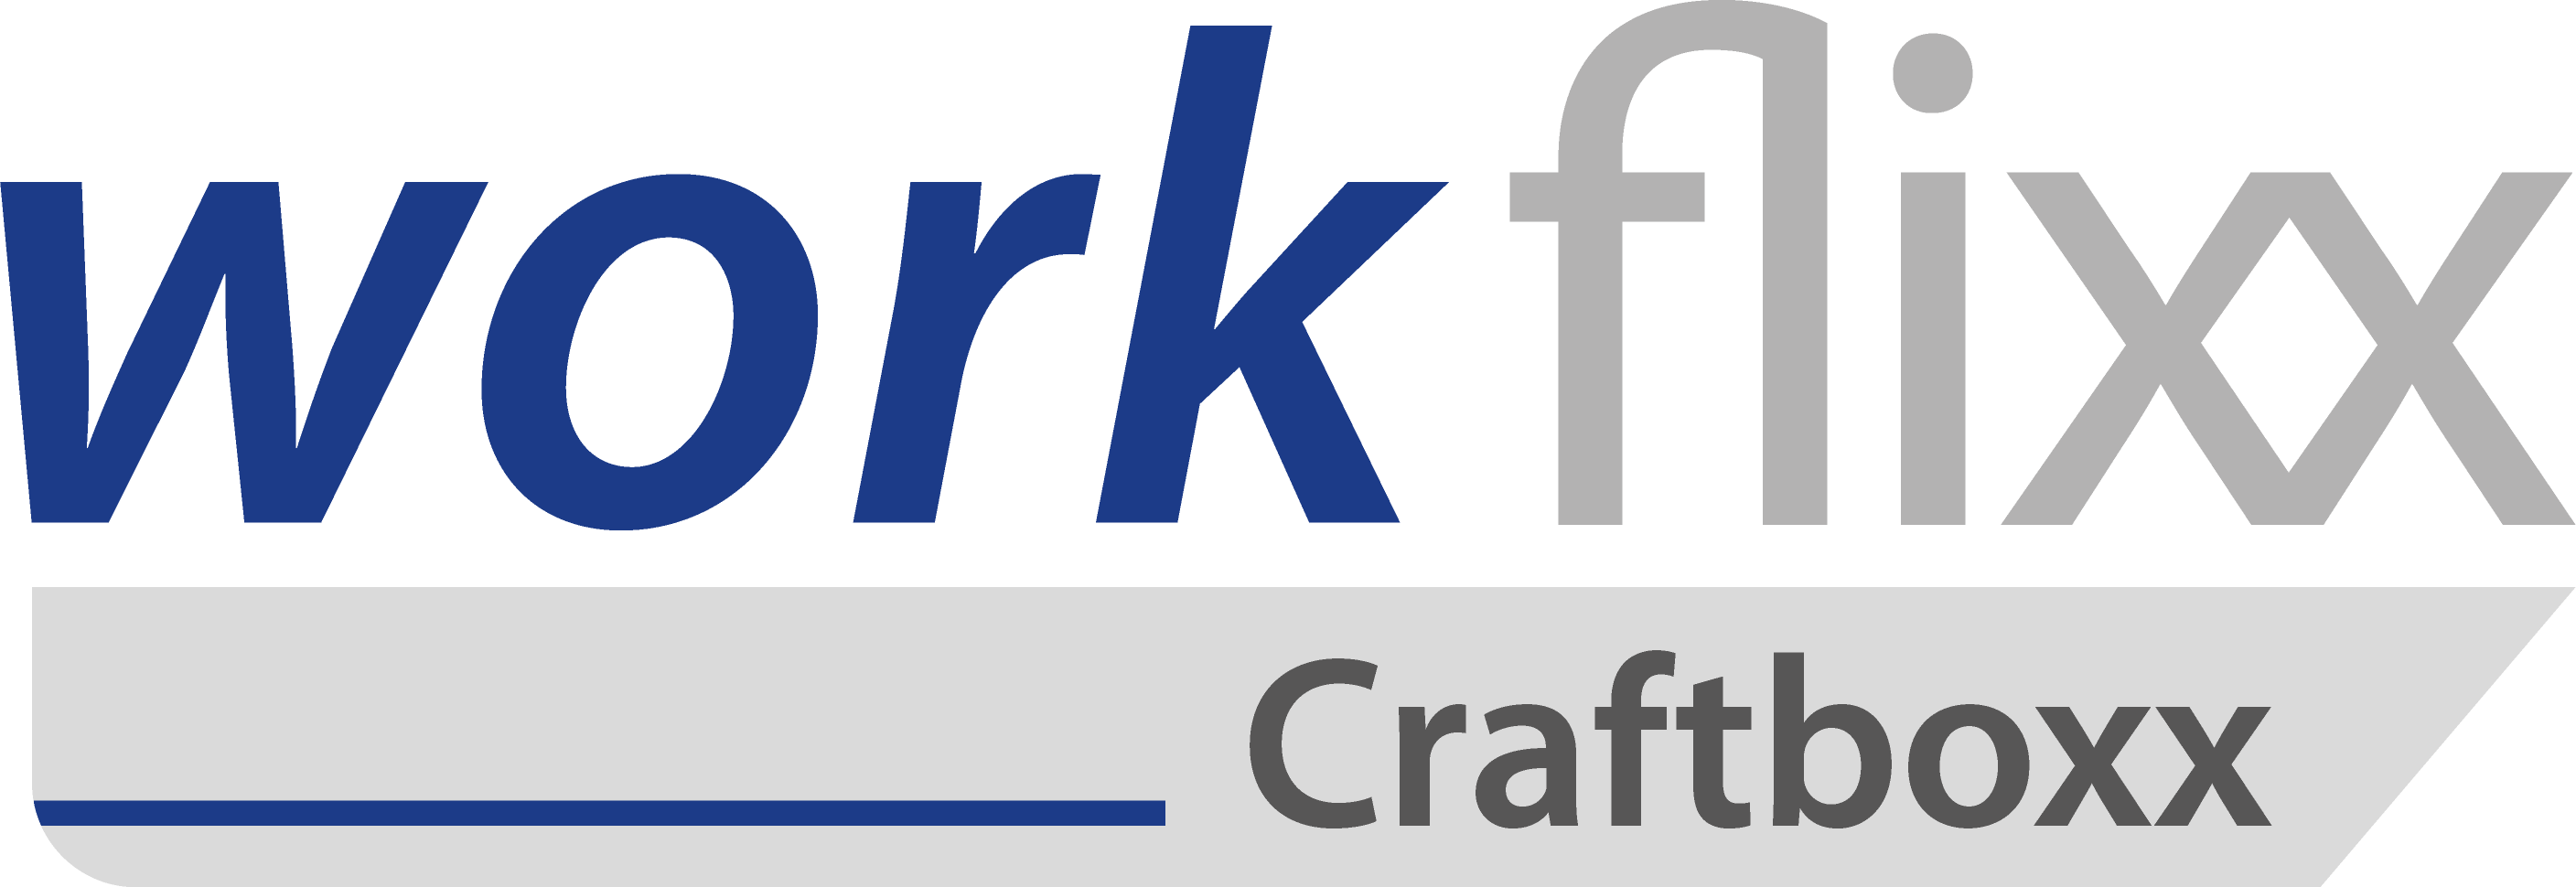 flixxstore - workflixx Craftboxx Logo